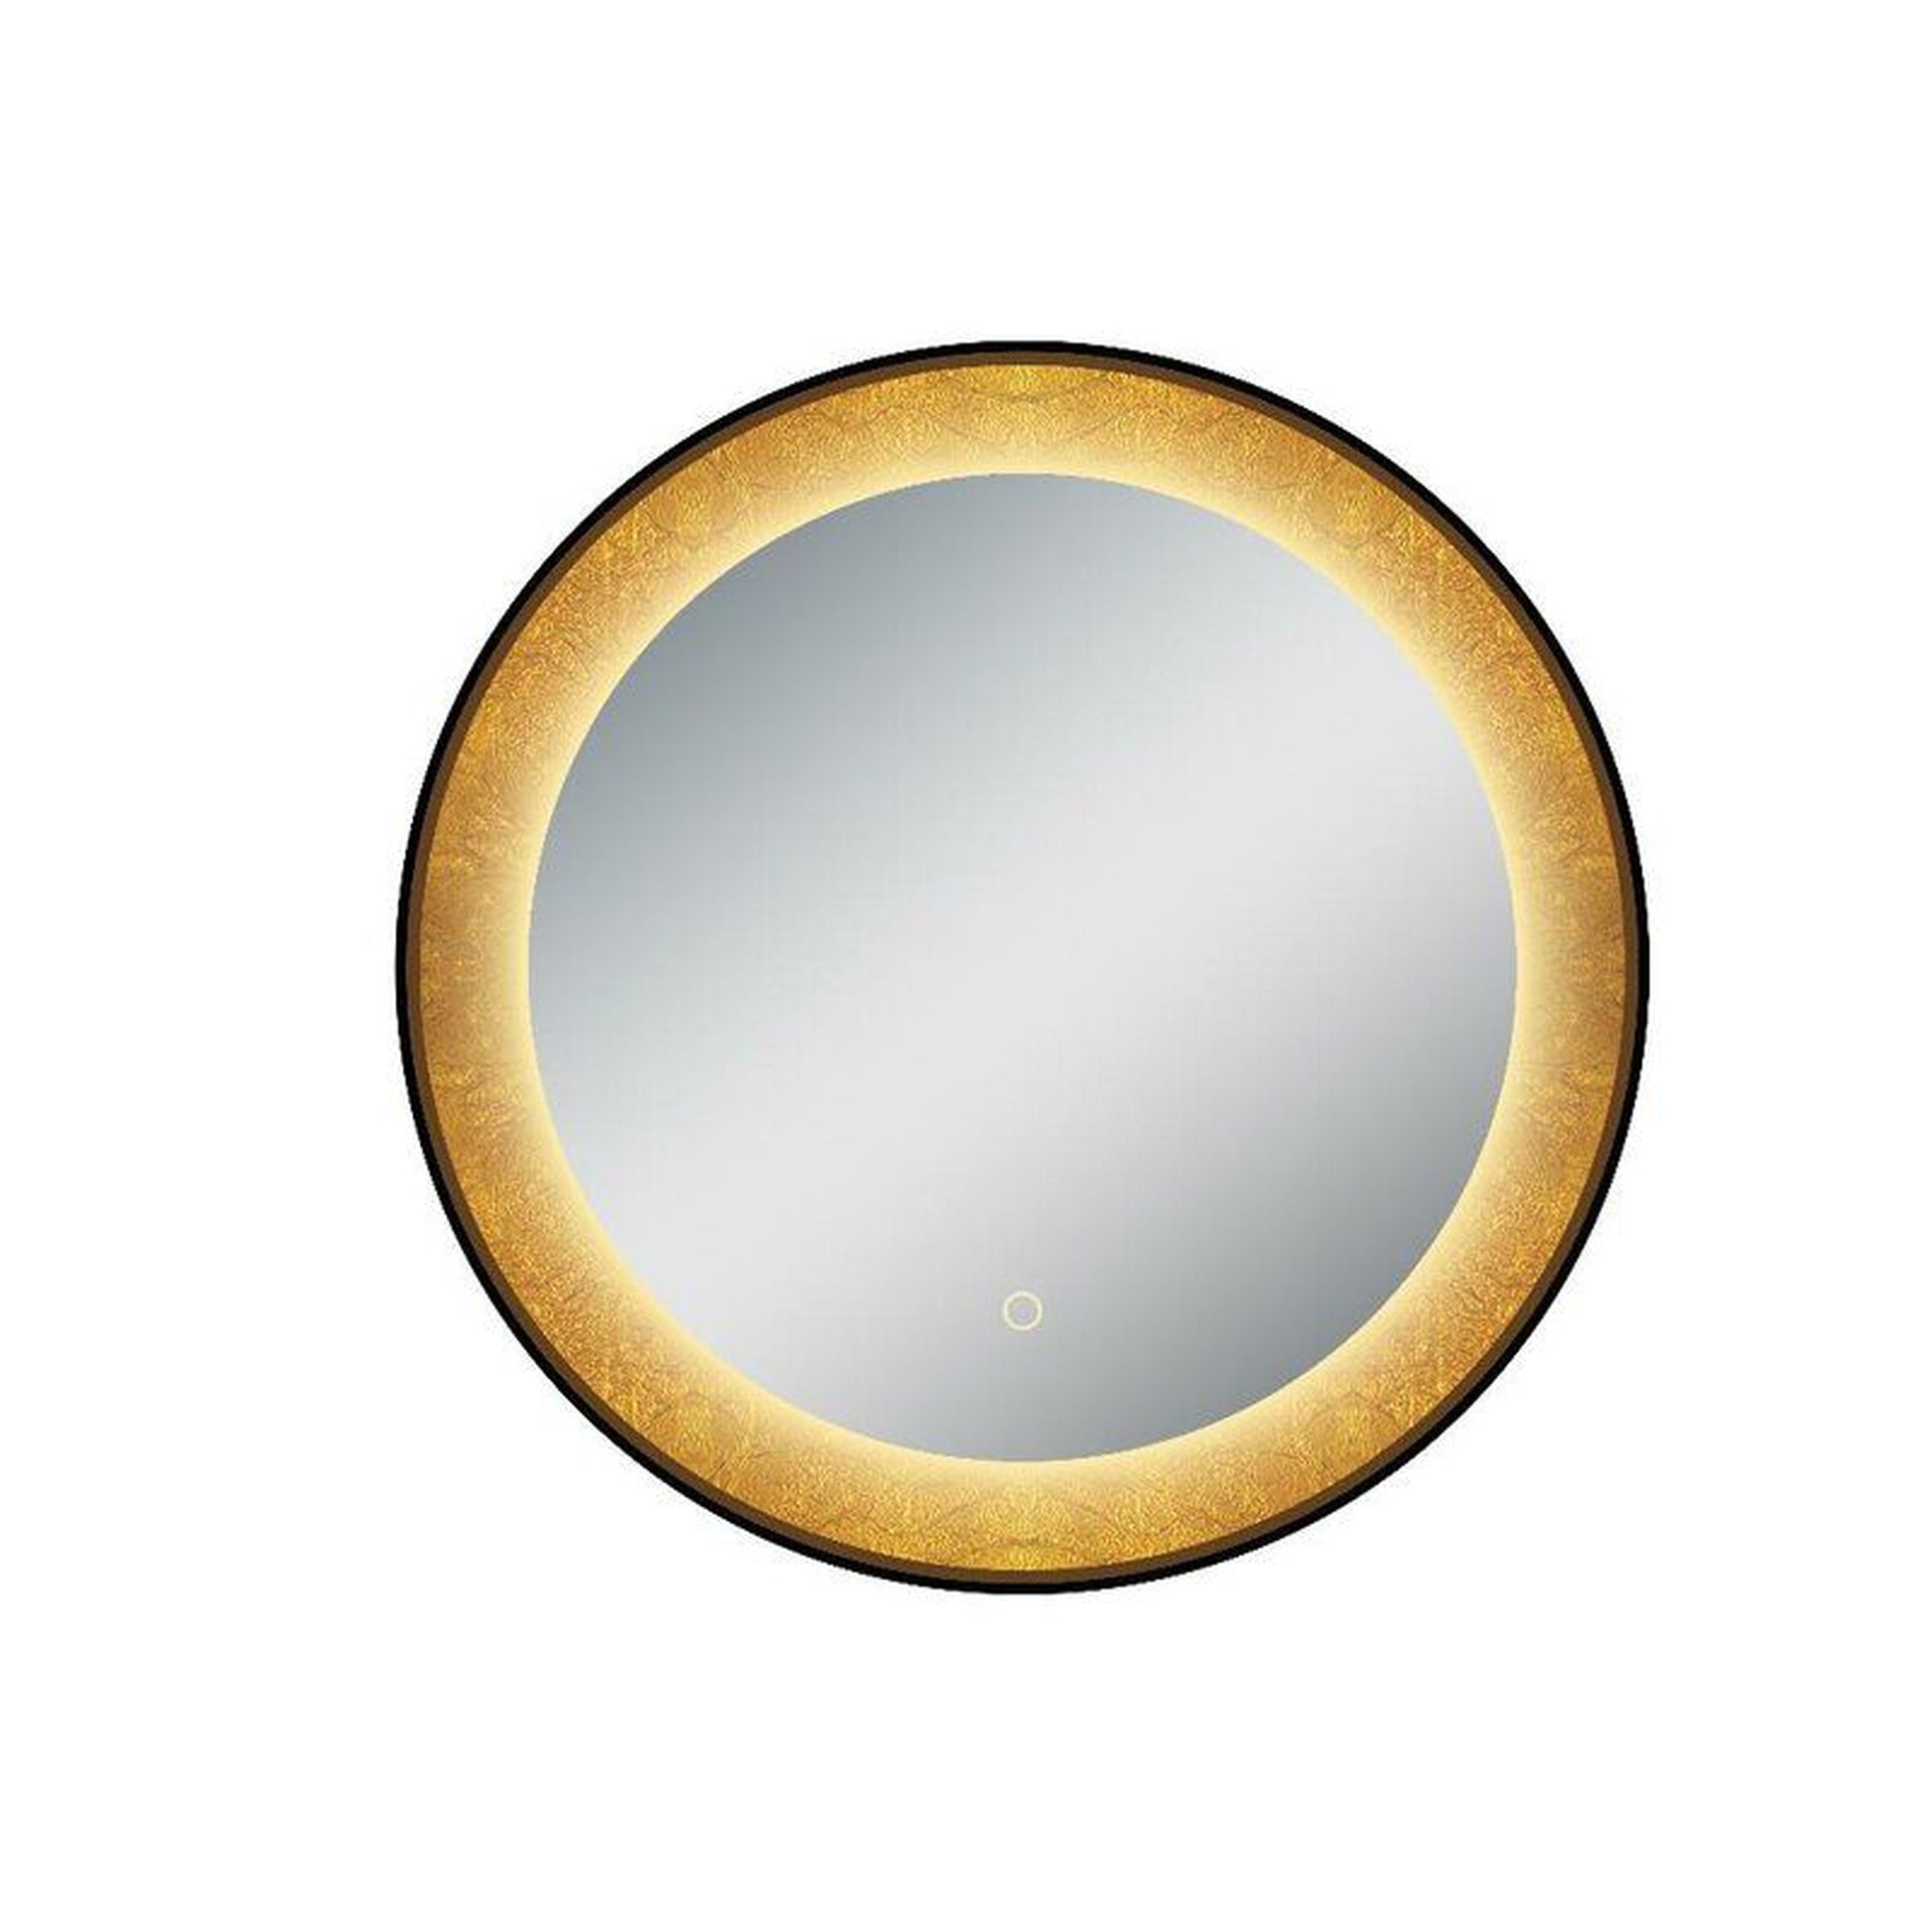 DreamWerks Kenyatta 30" Round LED Mirror with Gold Rimming